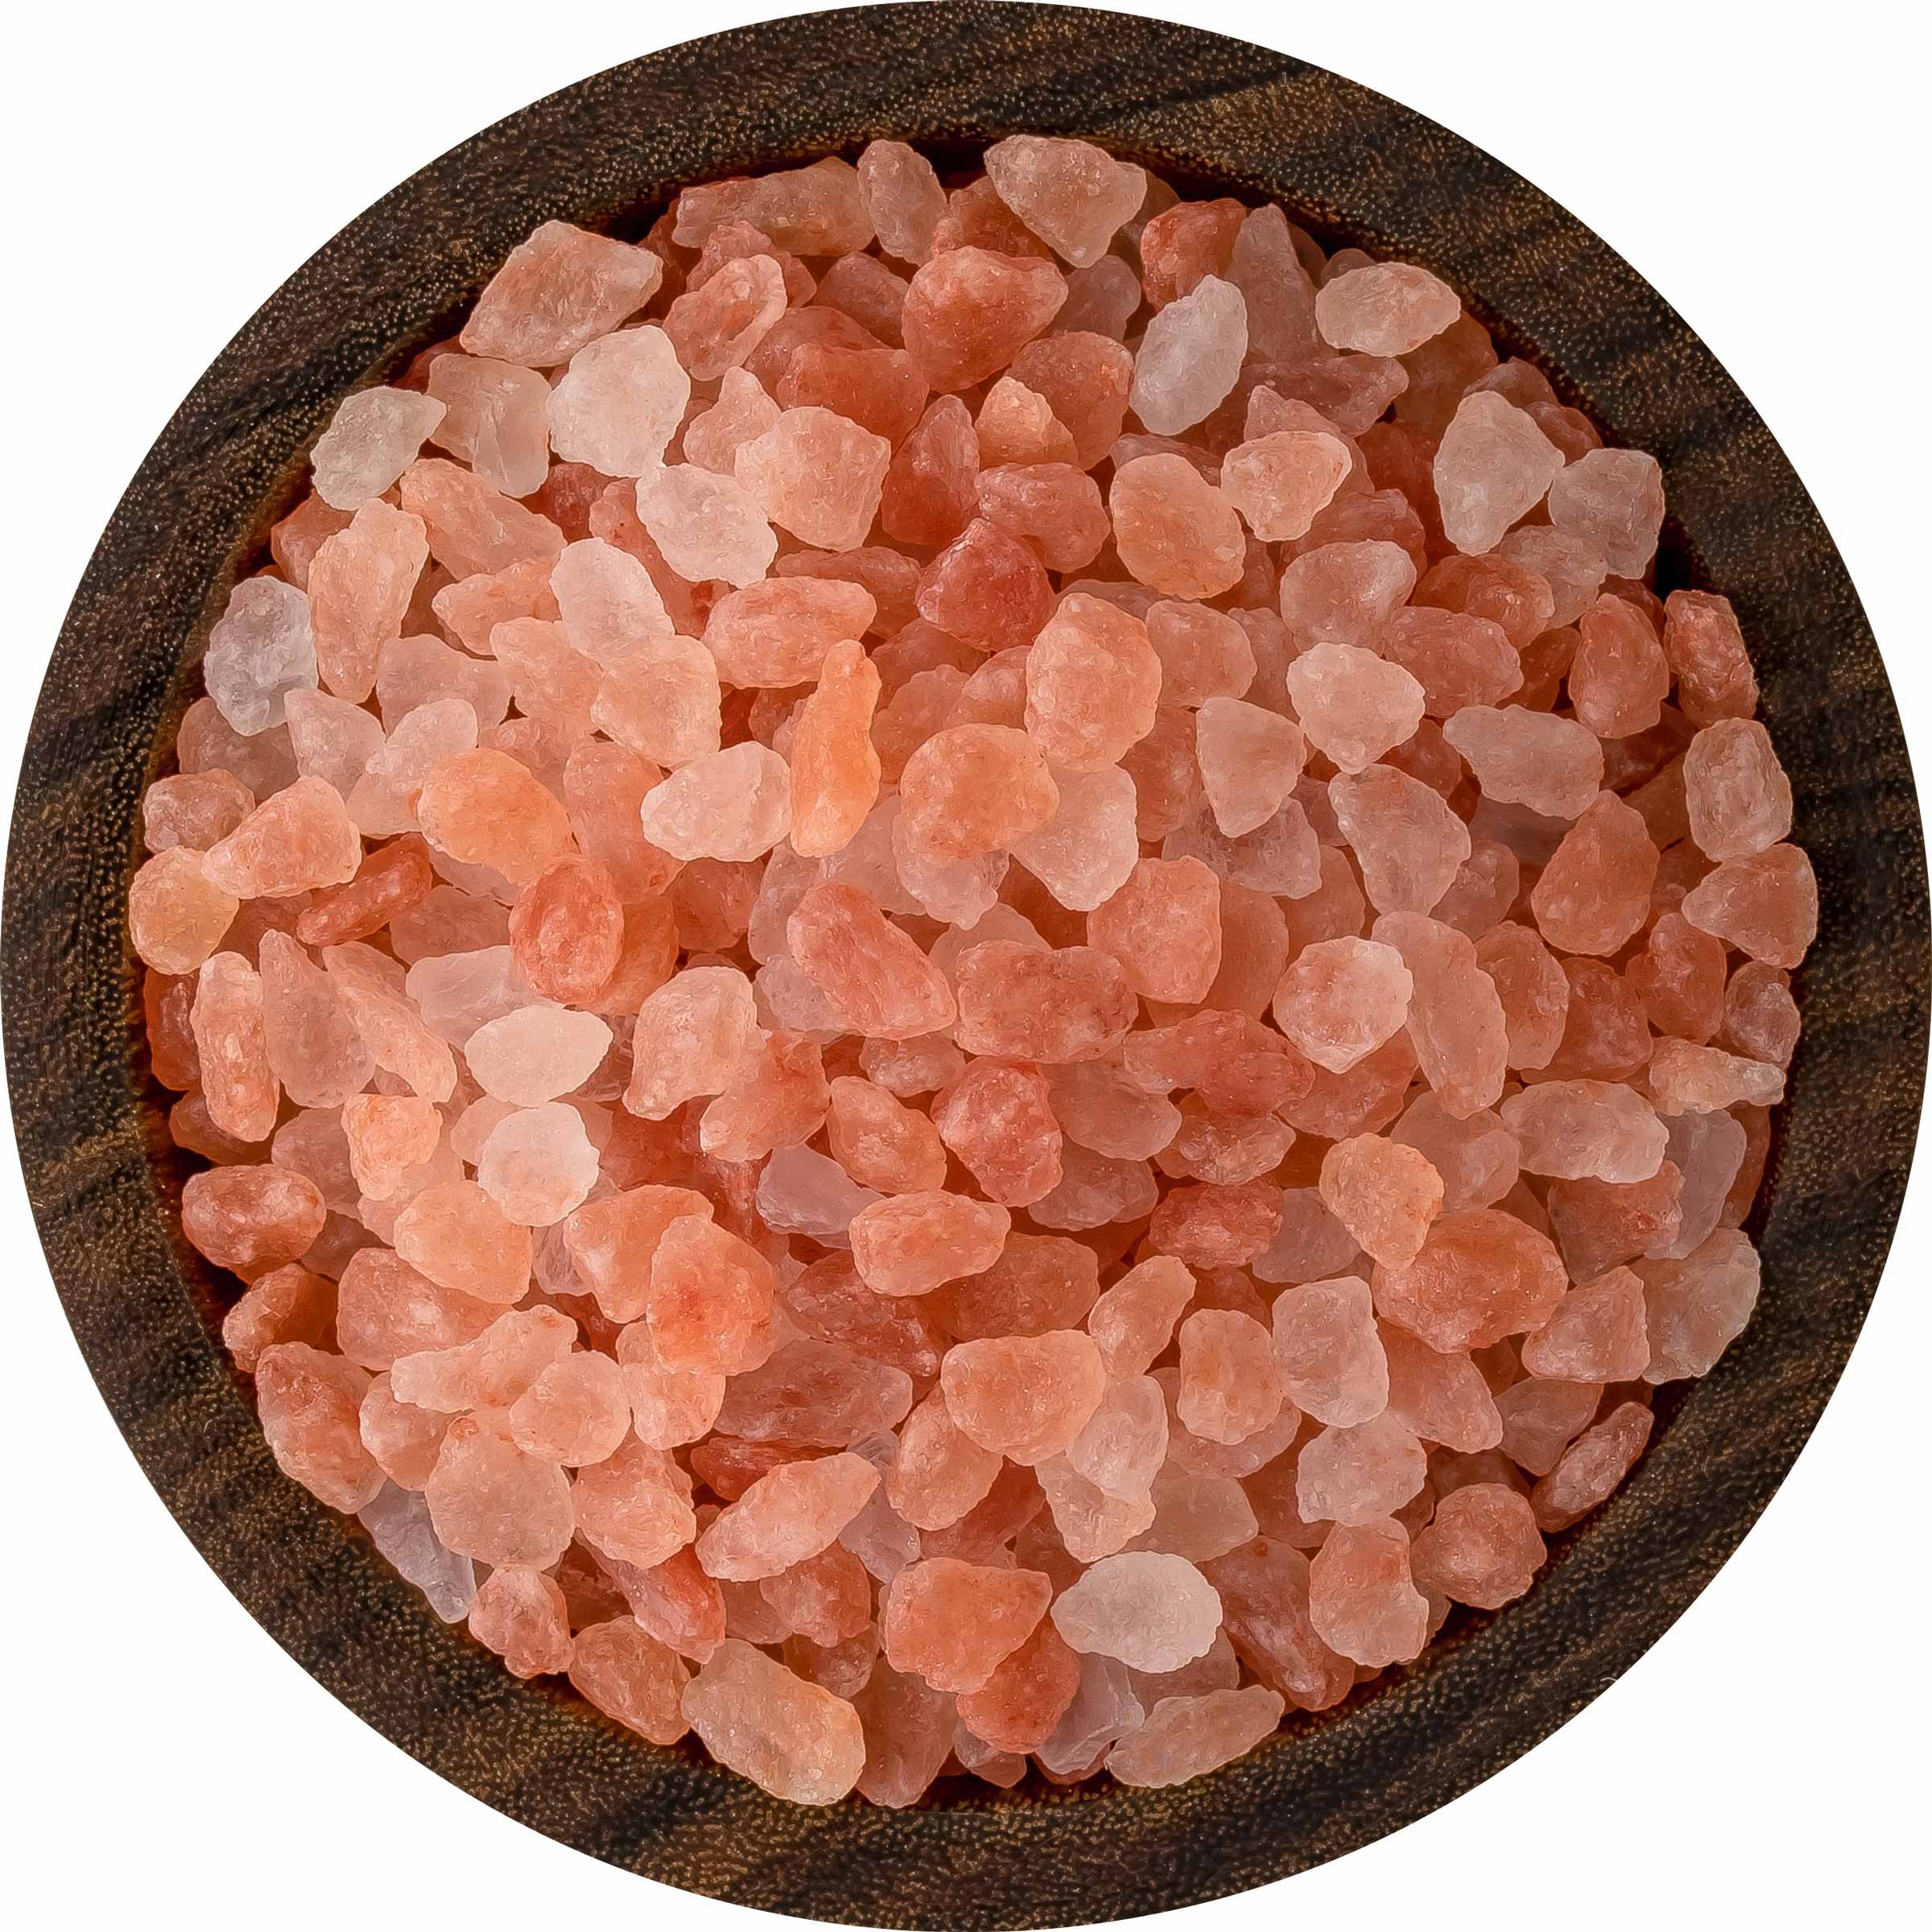 Origin of 'a grain of salt